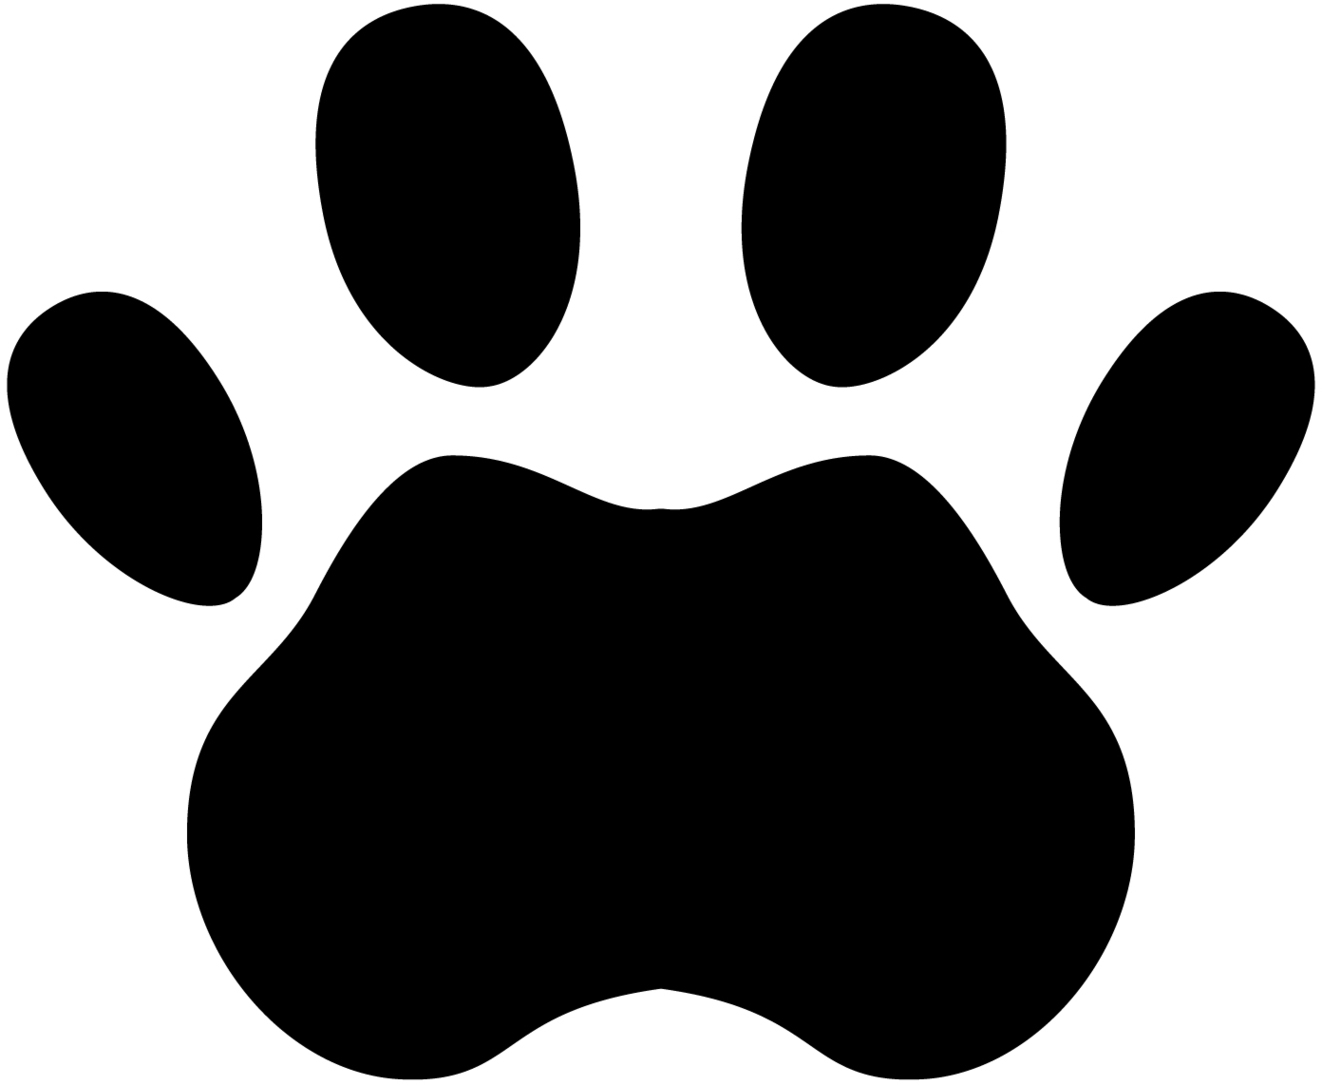 Dog paw prints paw prints dog paw print clip art free download 3 clipartbarn